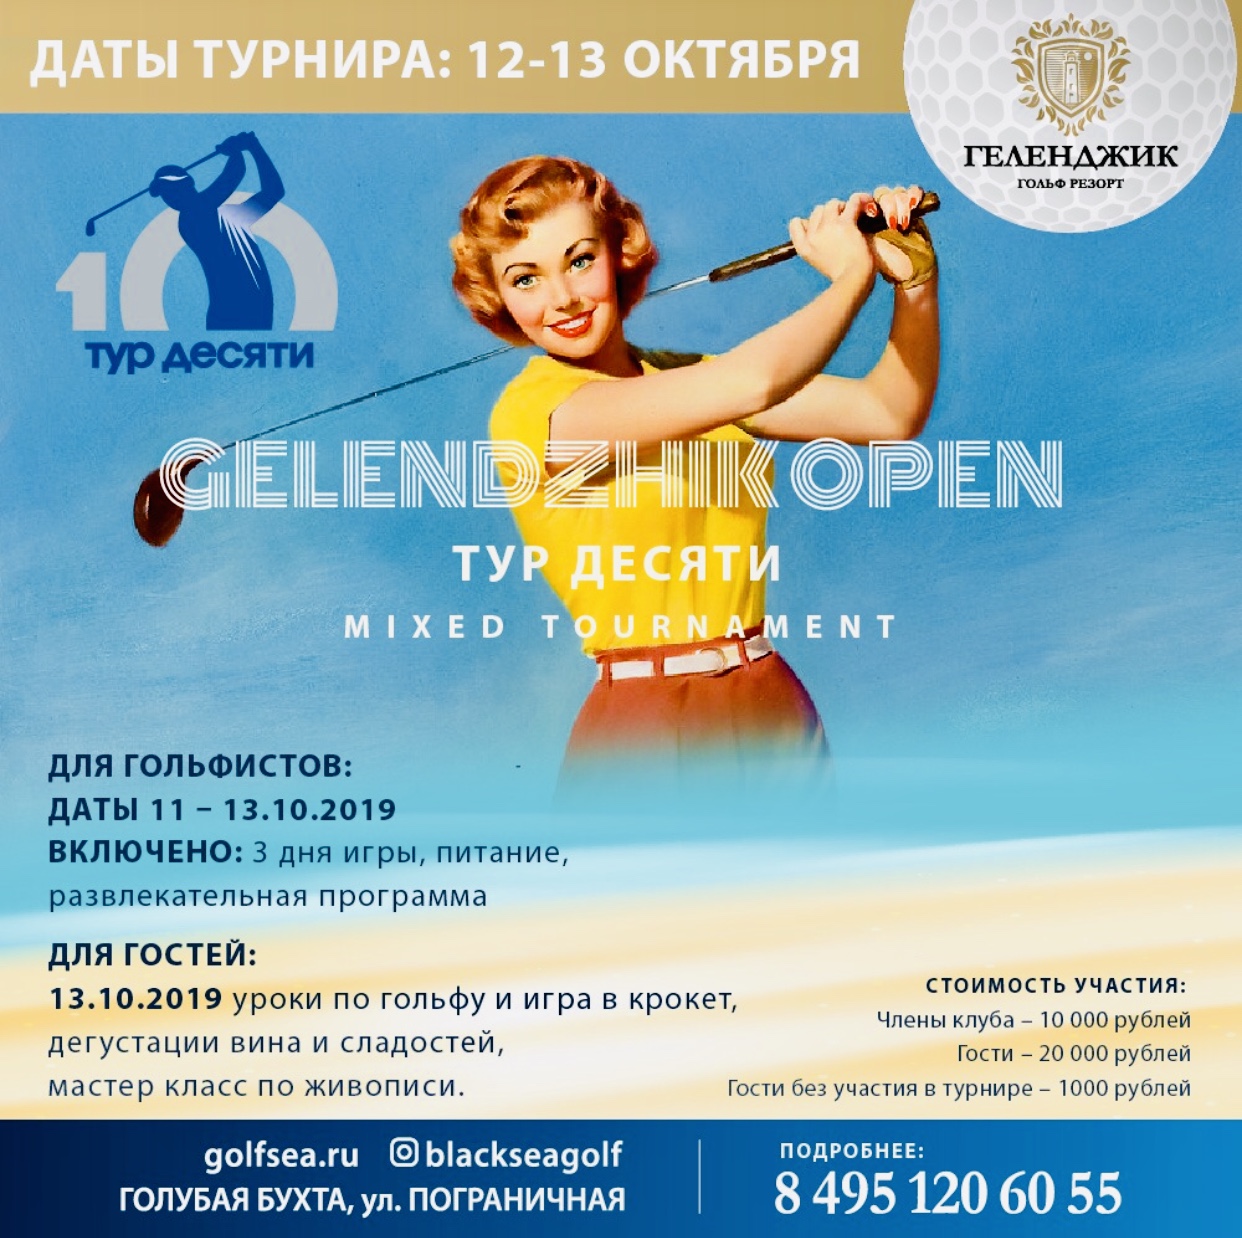 12-13 октября, Gelendzhik Open. «Тур Десяти». Mixed Tournament.